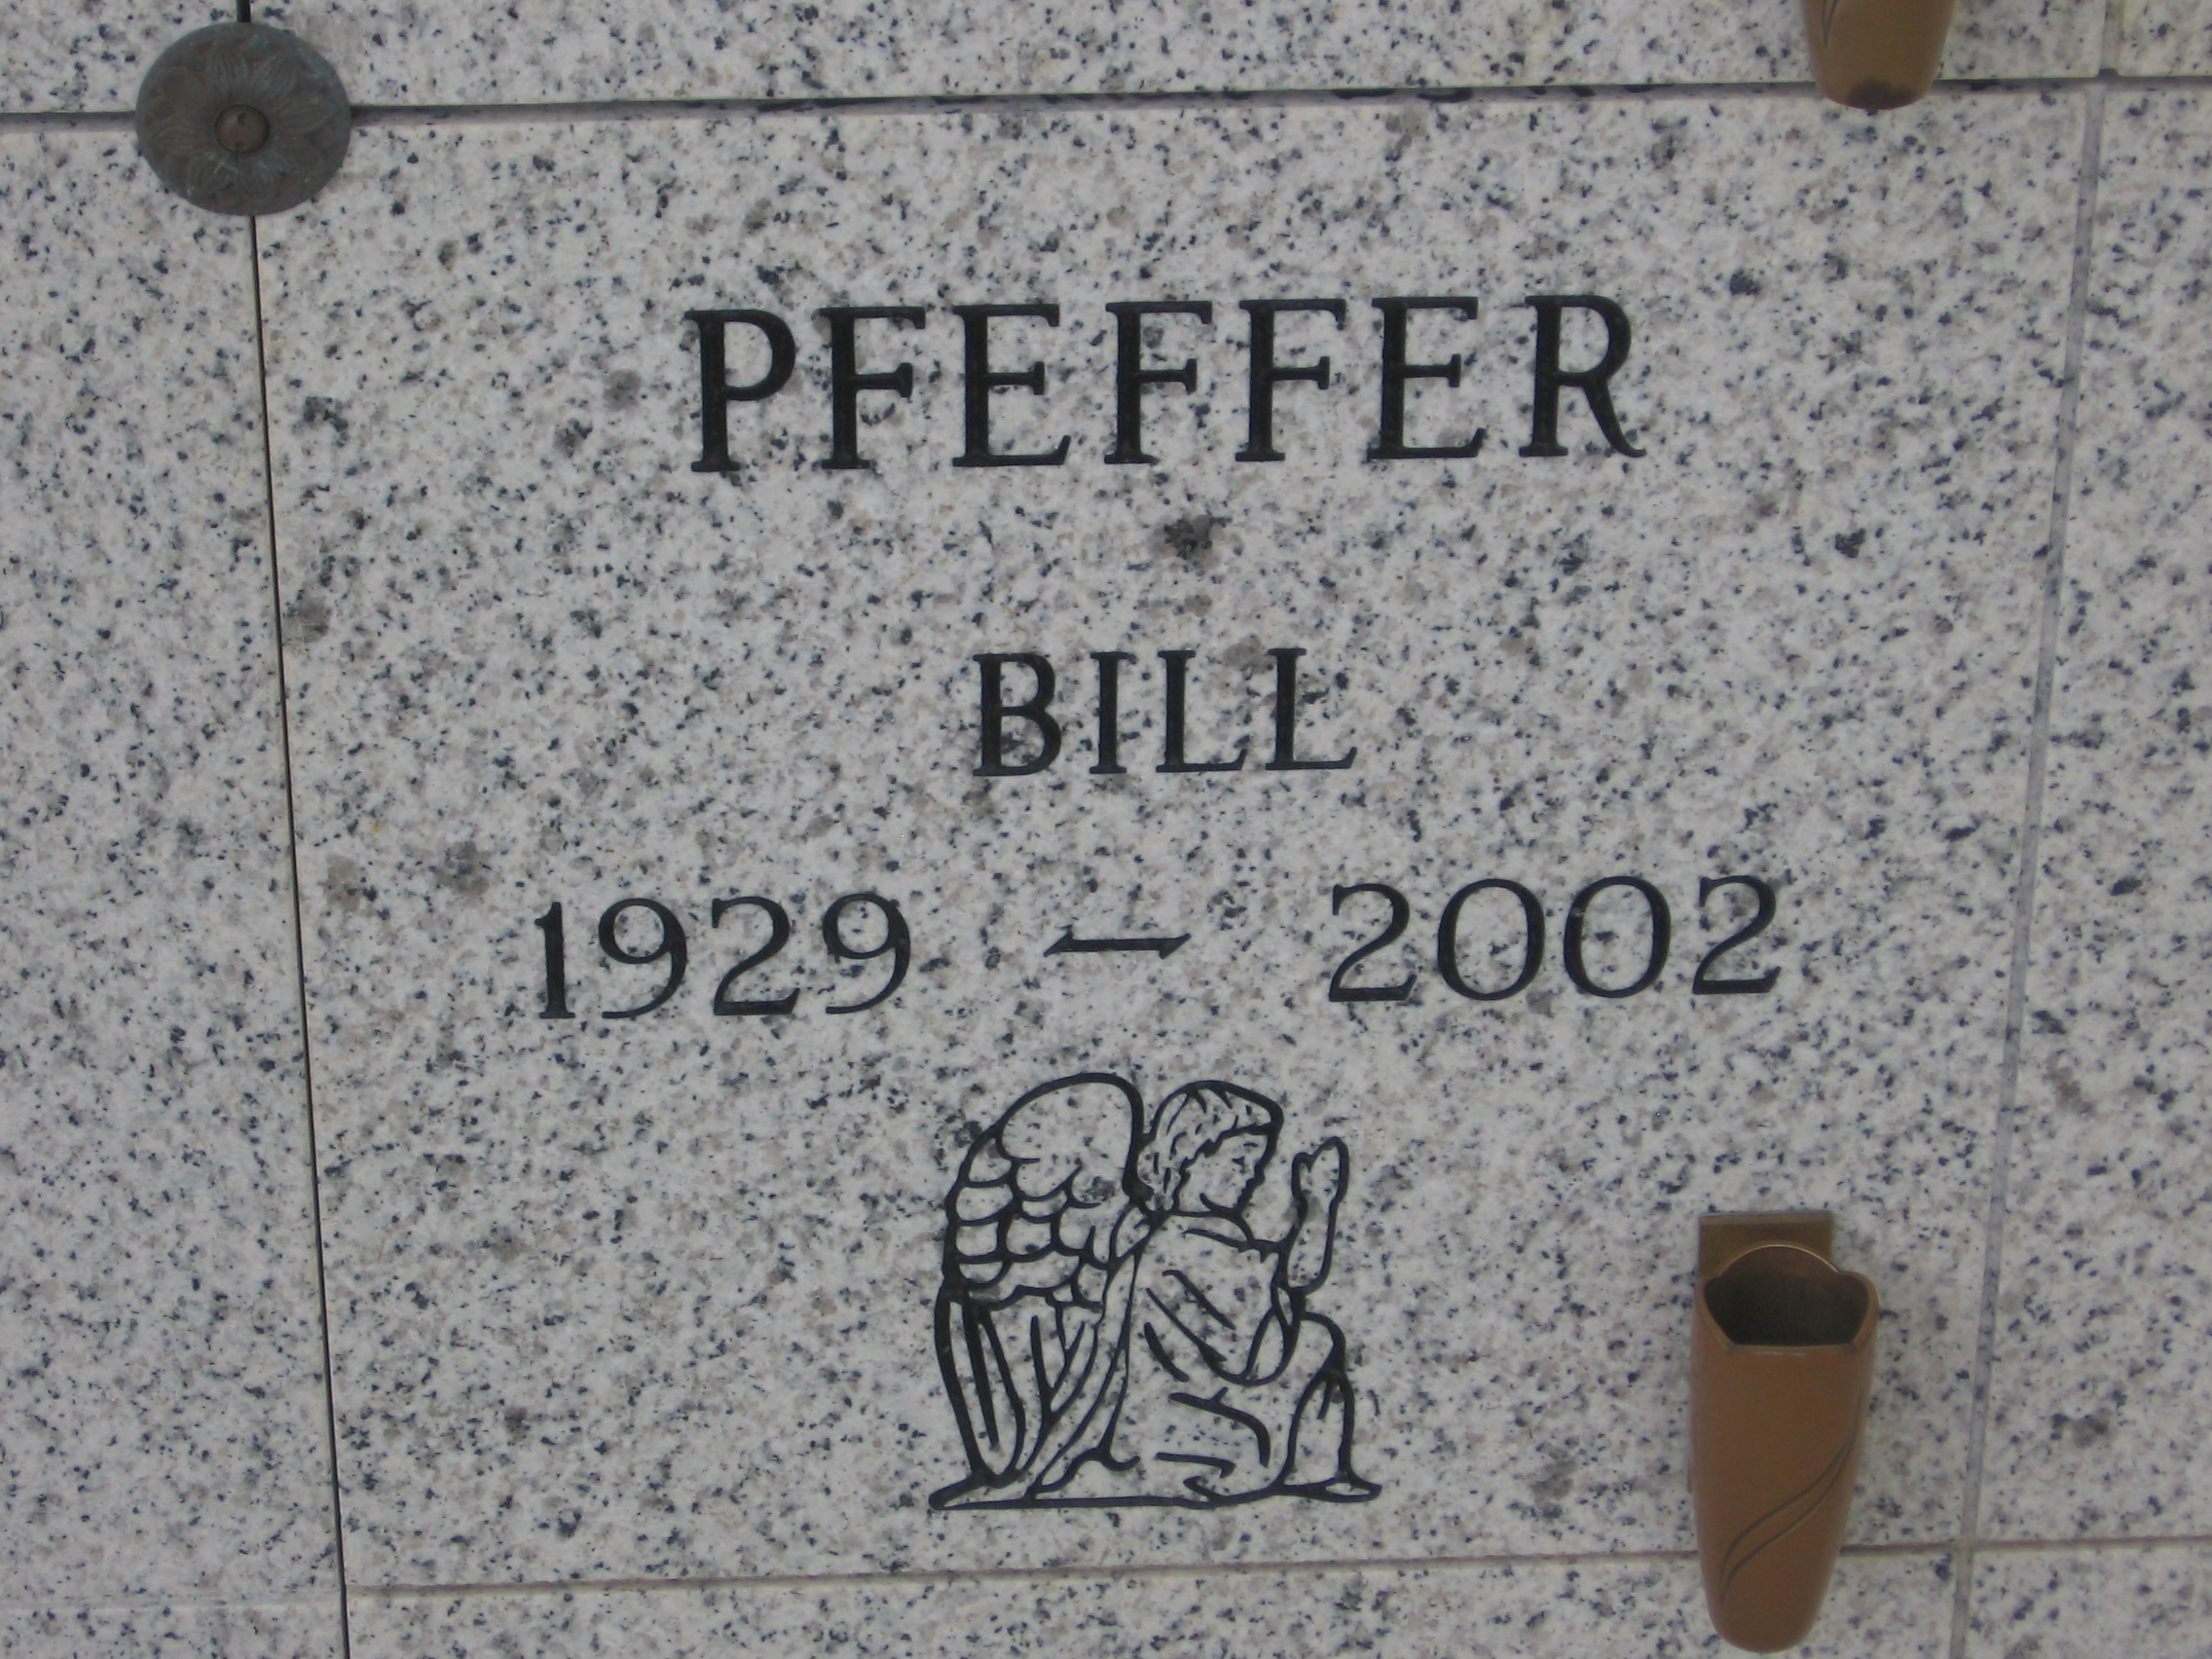 Bill Pfeffer